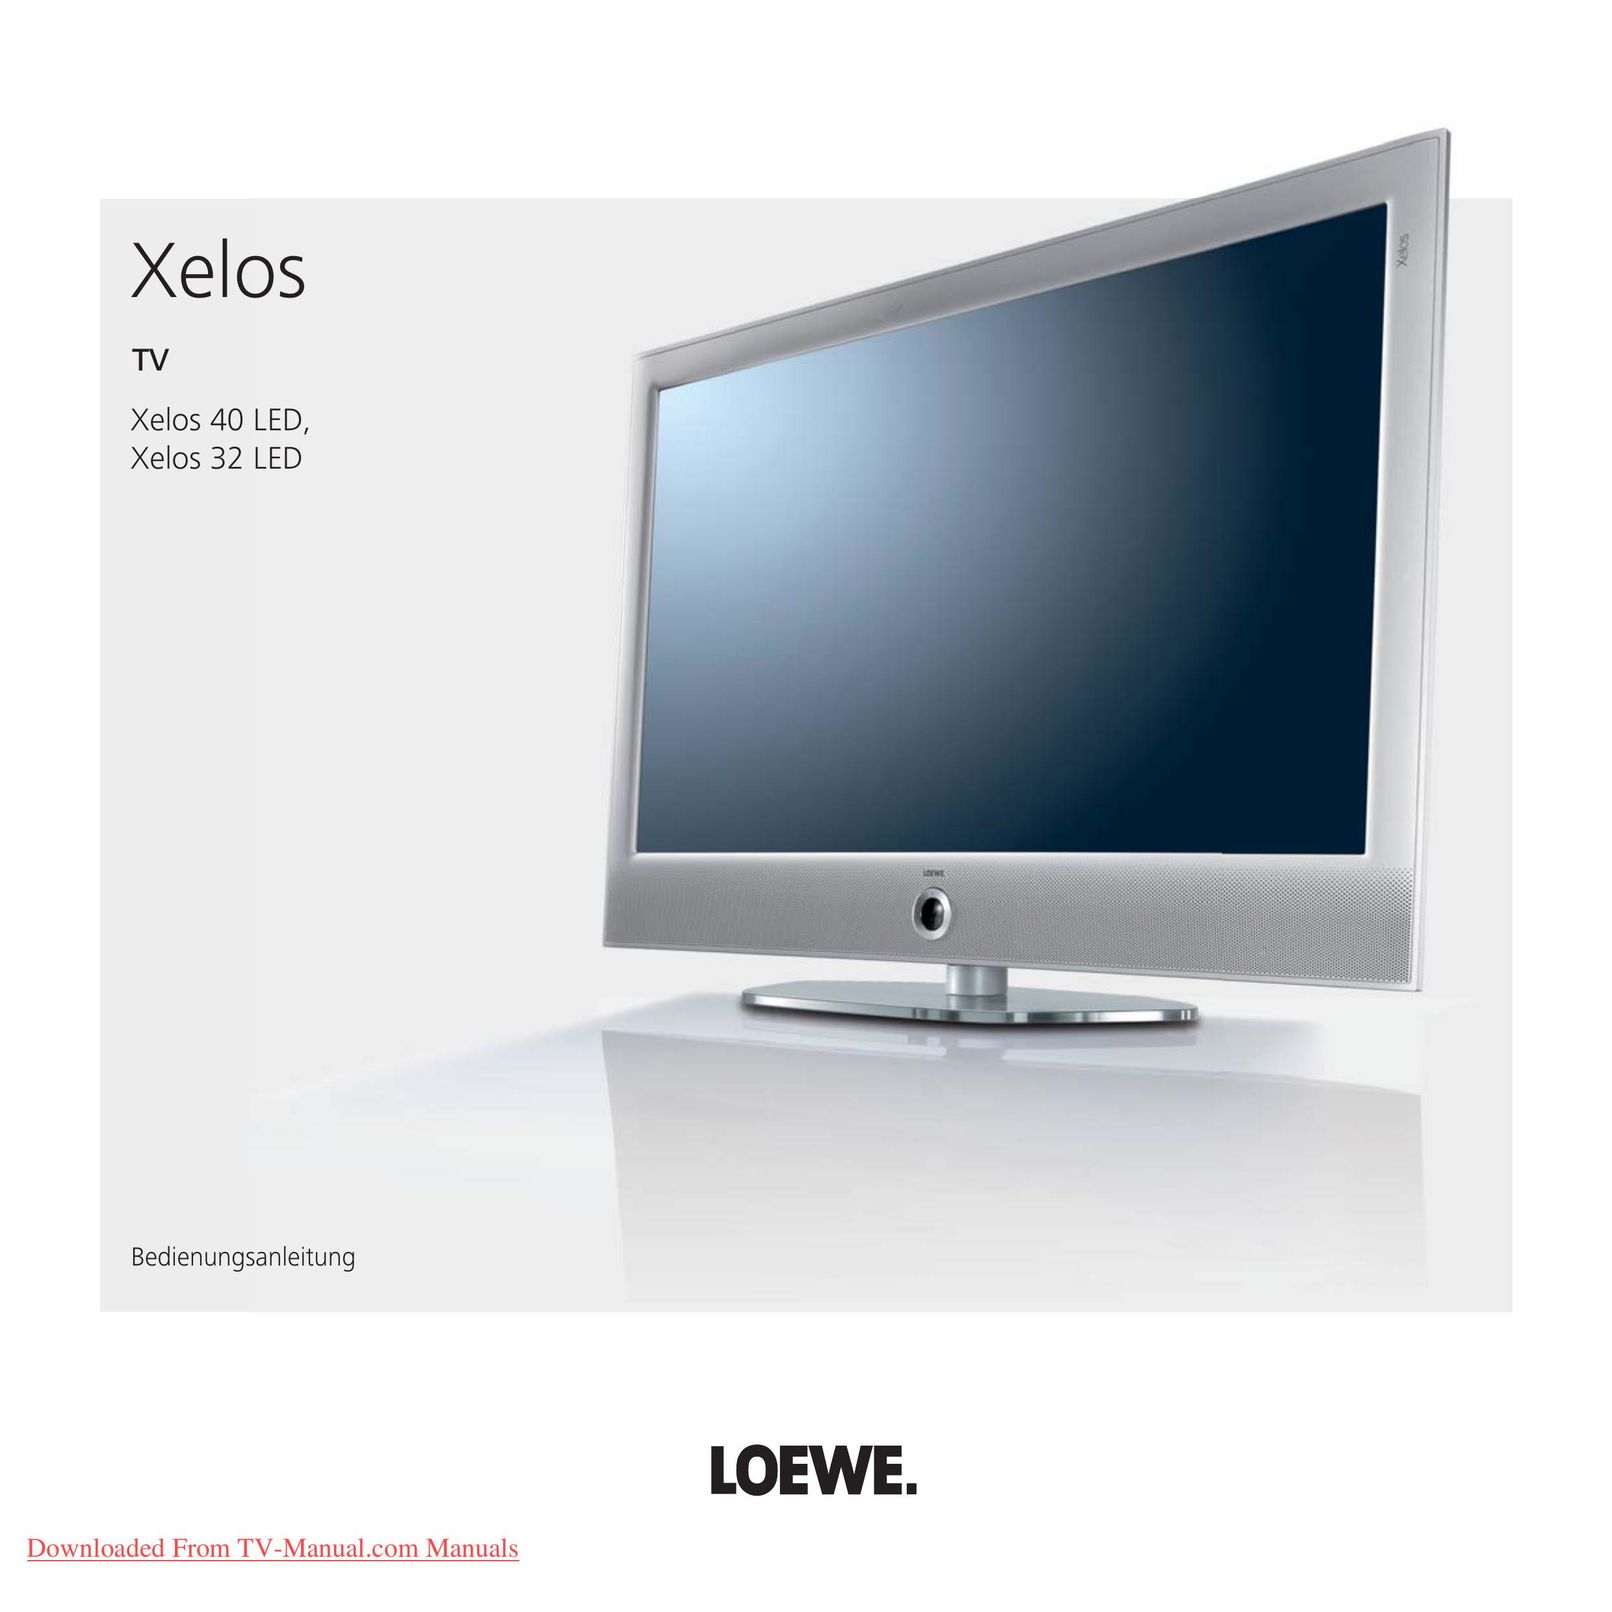 Loewe Xelos 40 LED Work Light User Manual